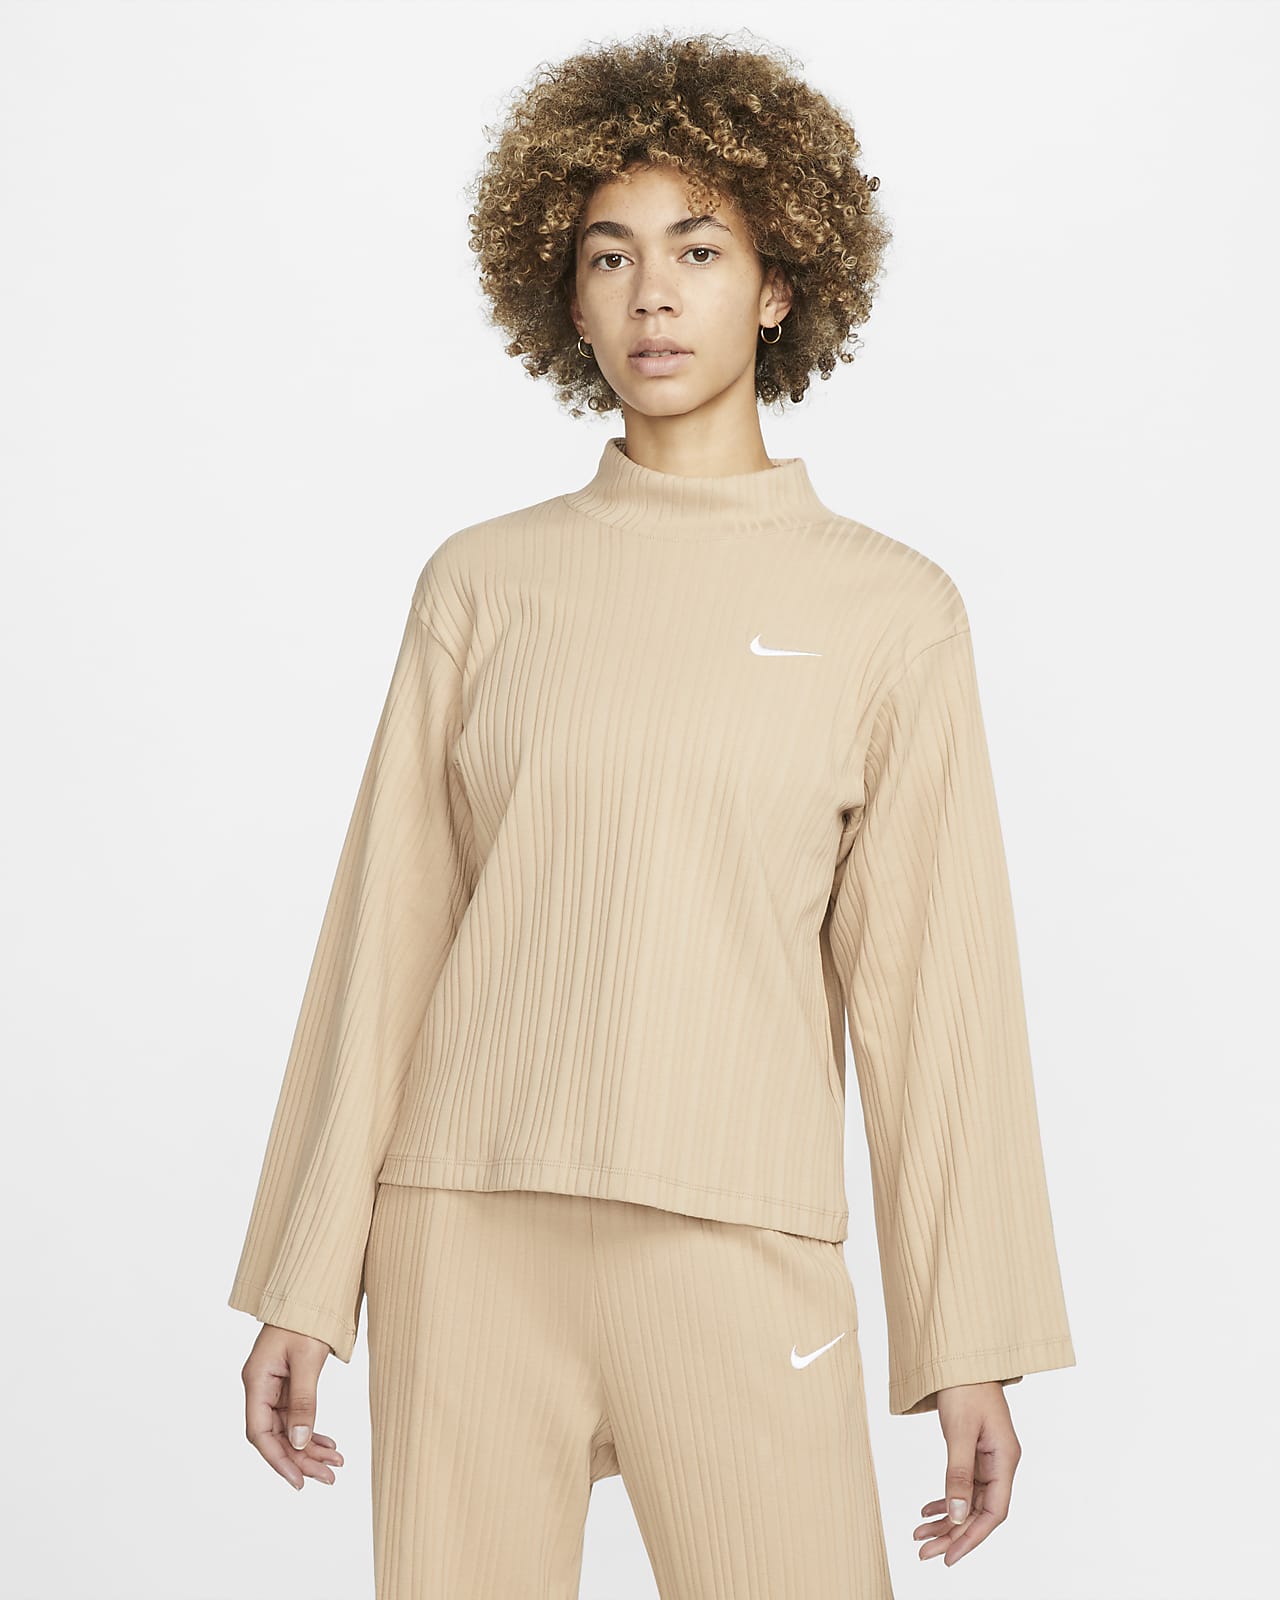 Ribbed Jersey Long-Sleeve Top. Nike FI